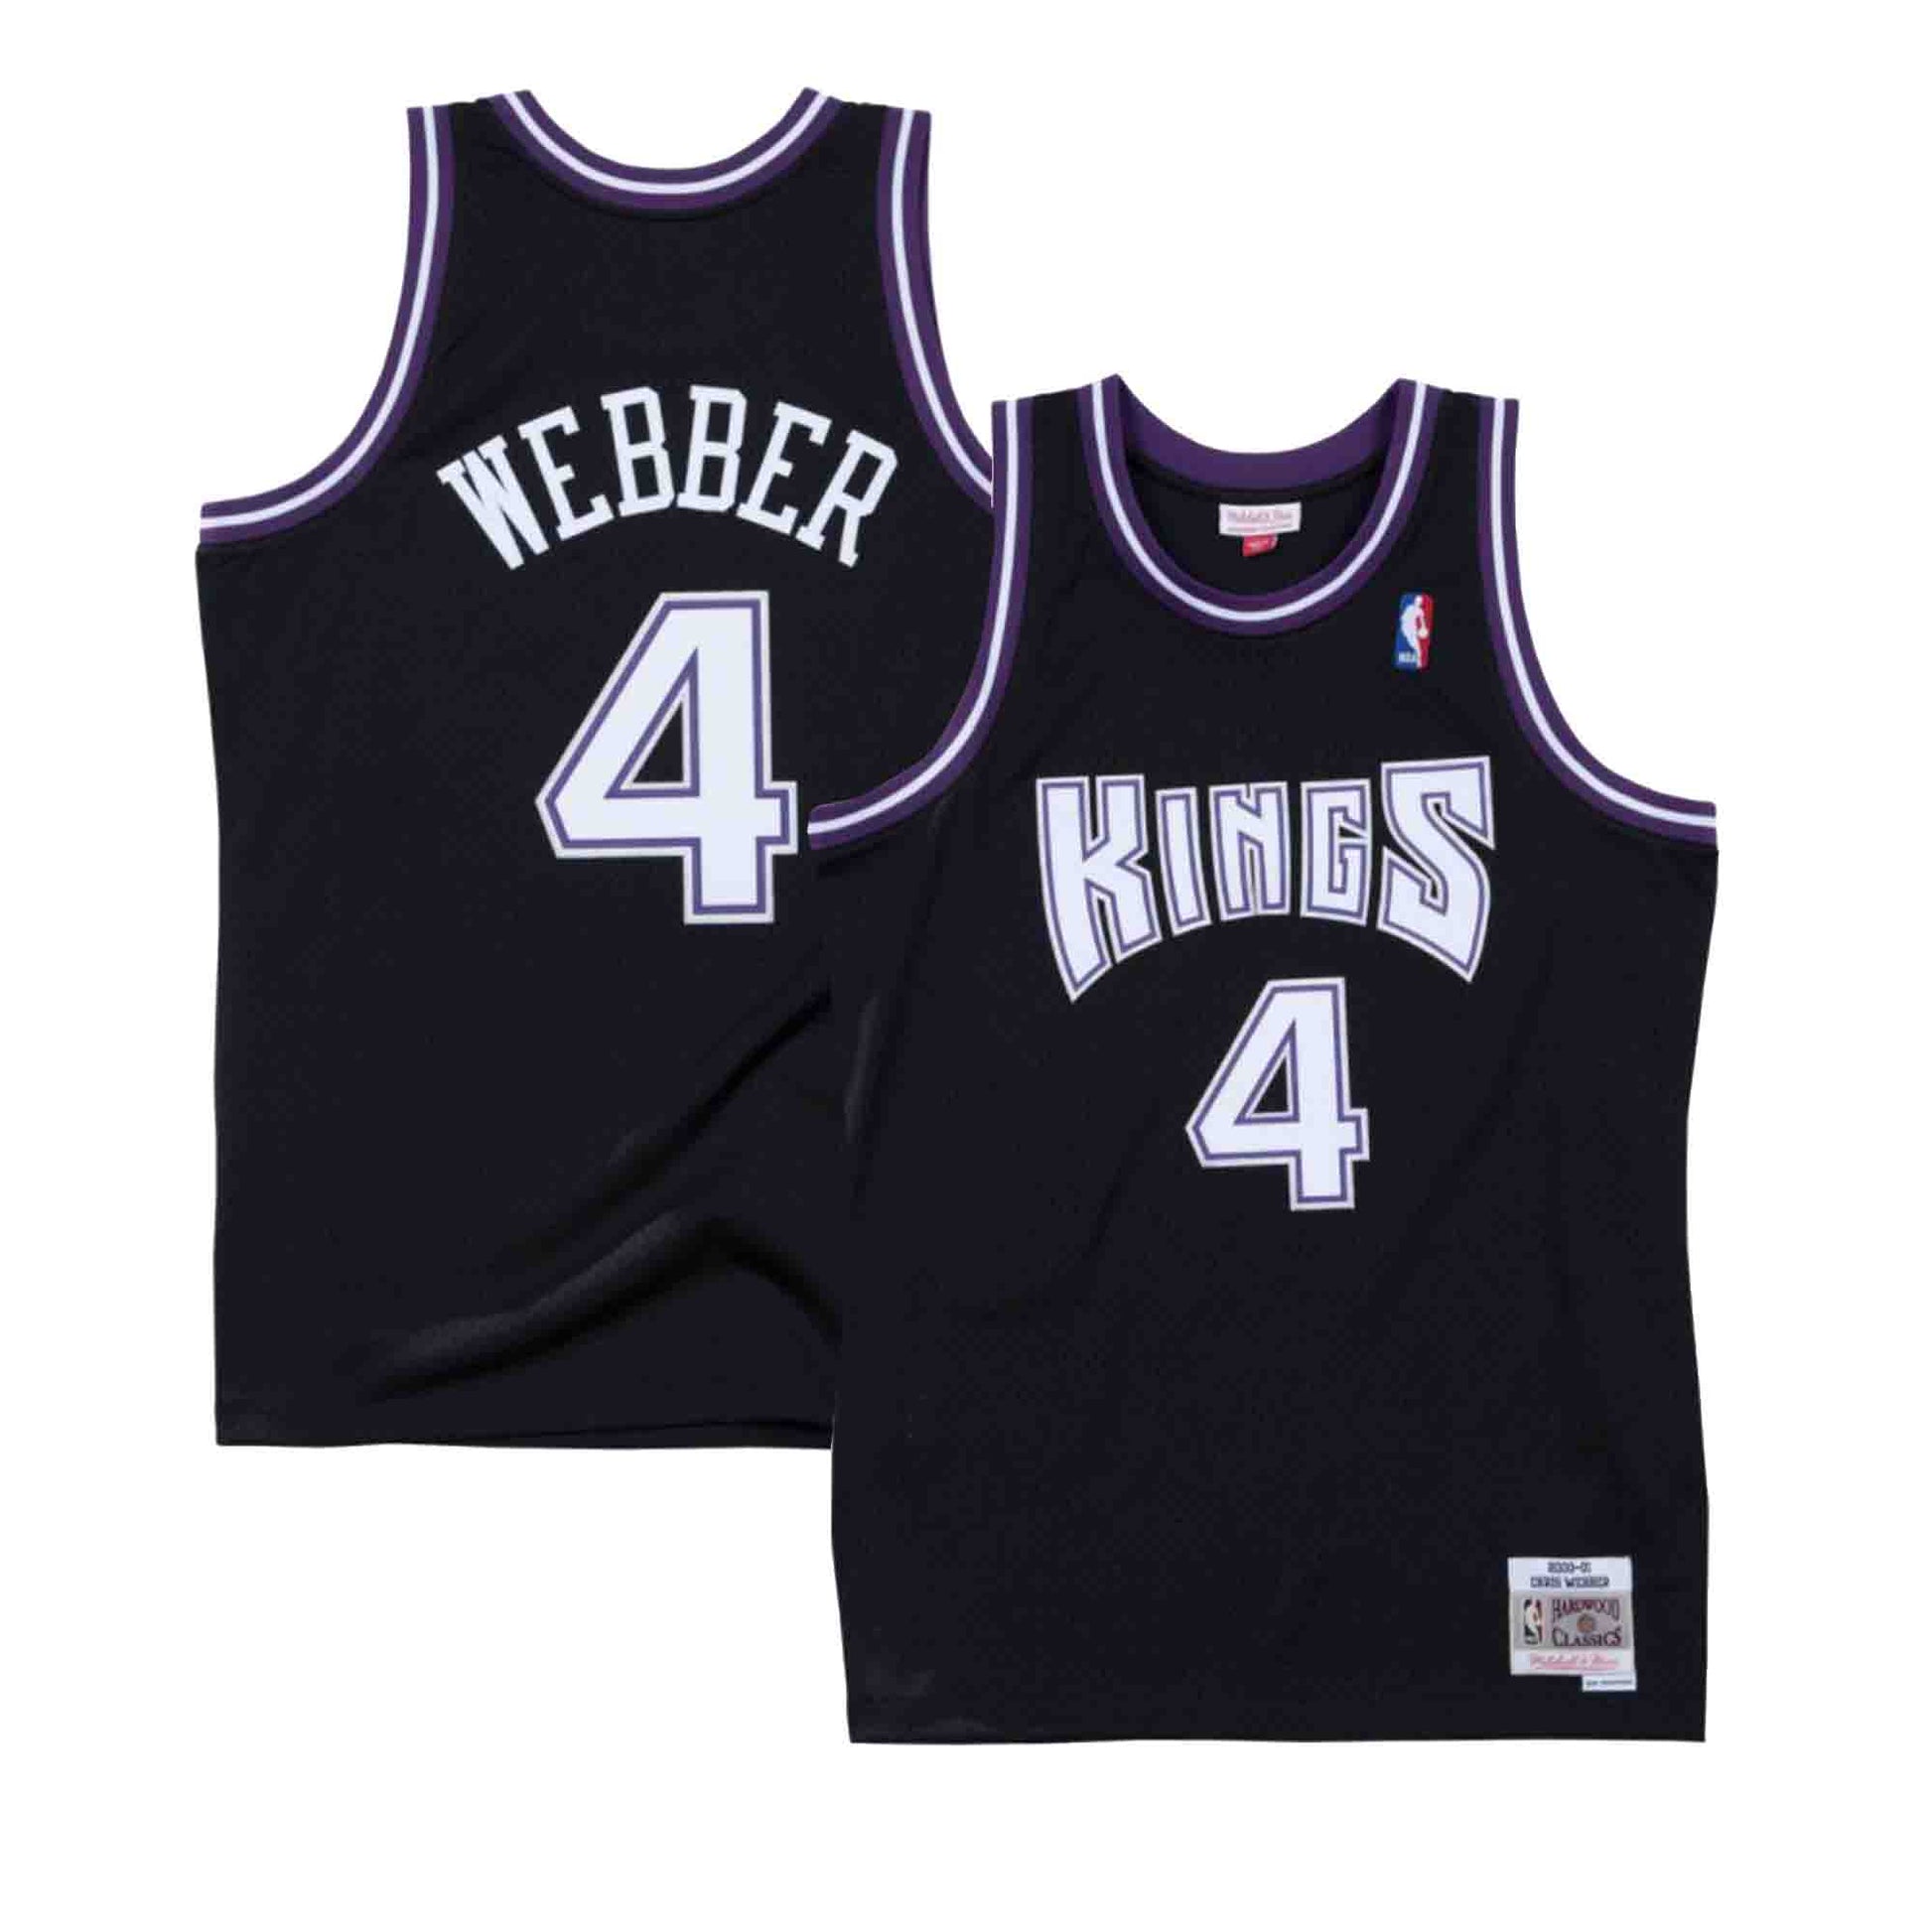 Chris Webber youth medium NBA Jersey Sacramento Kings . 22” length